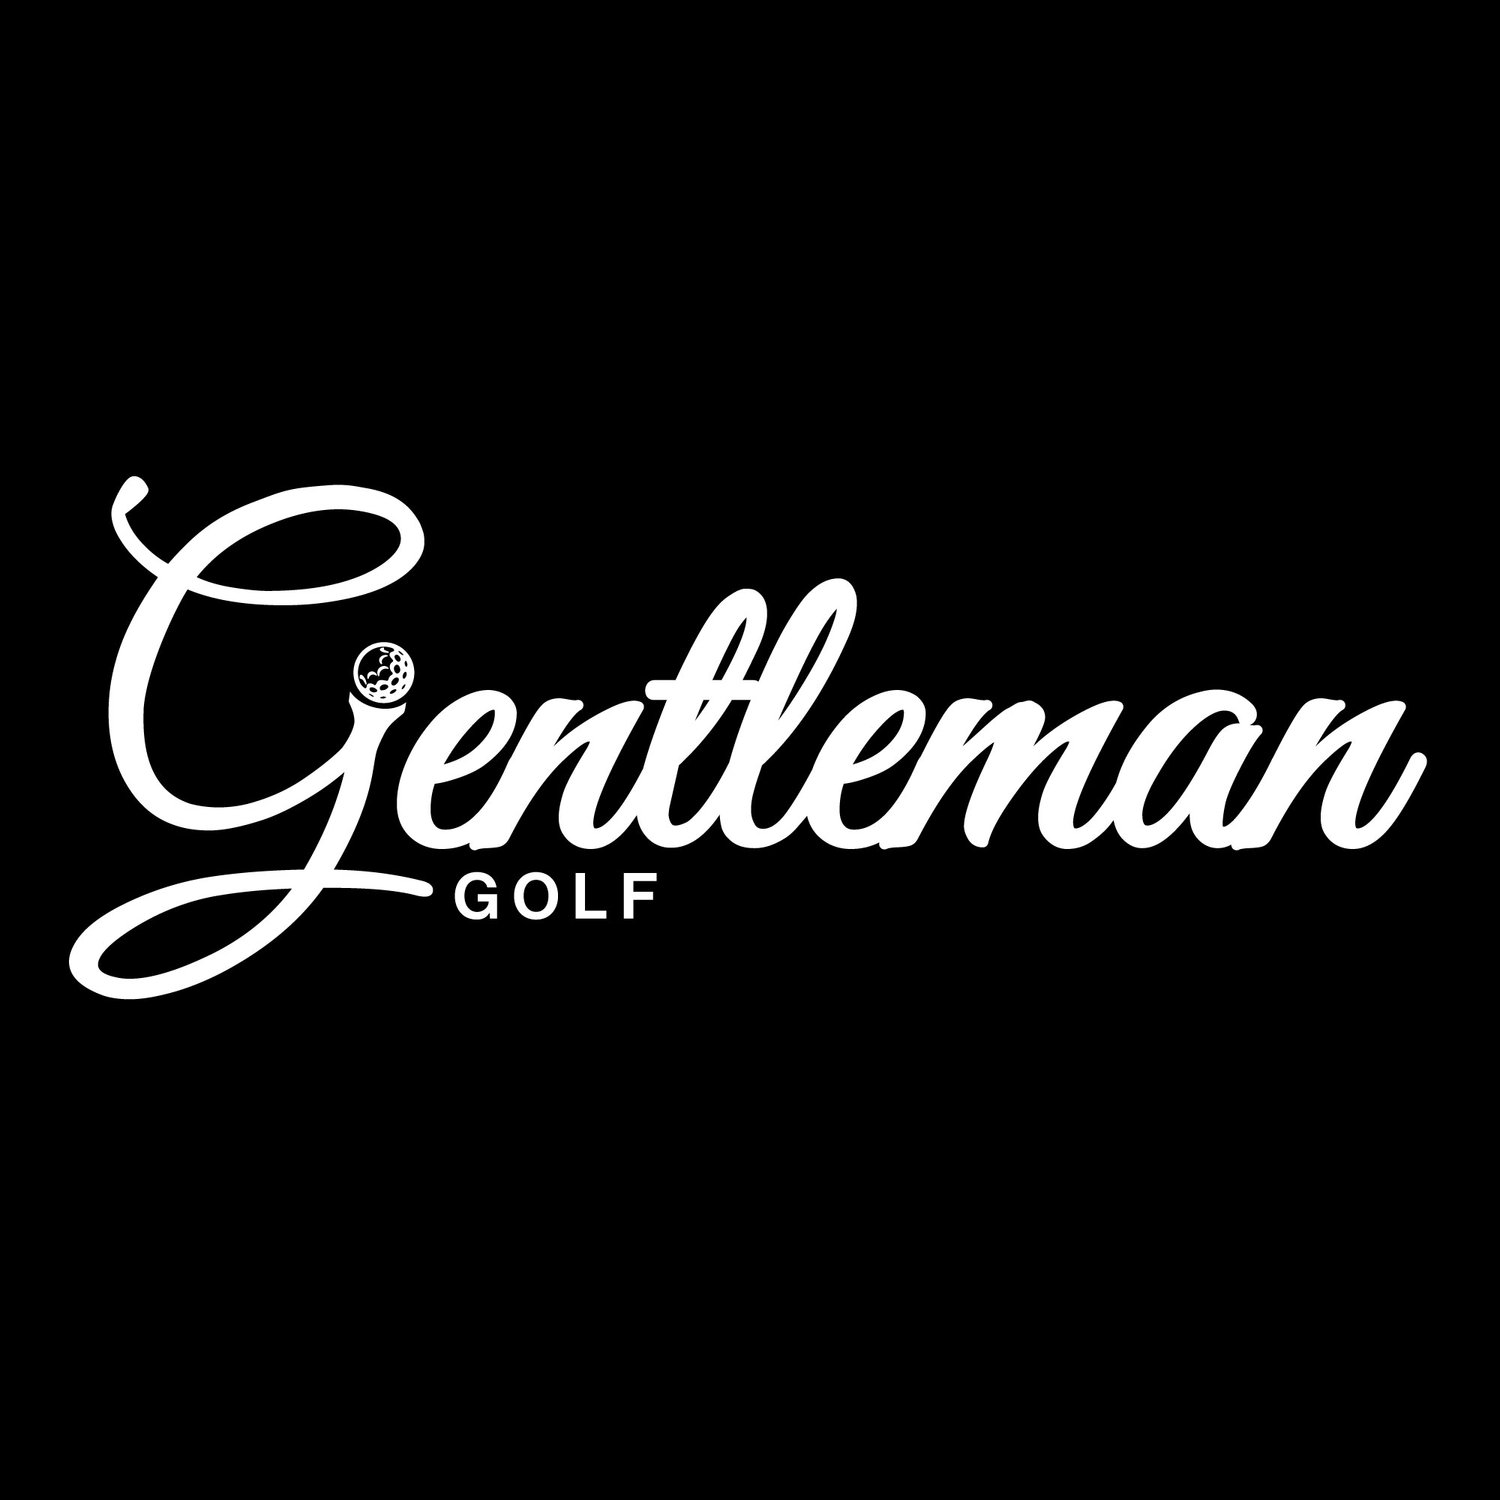 Gentleman Golf